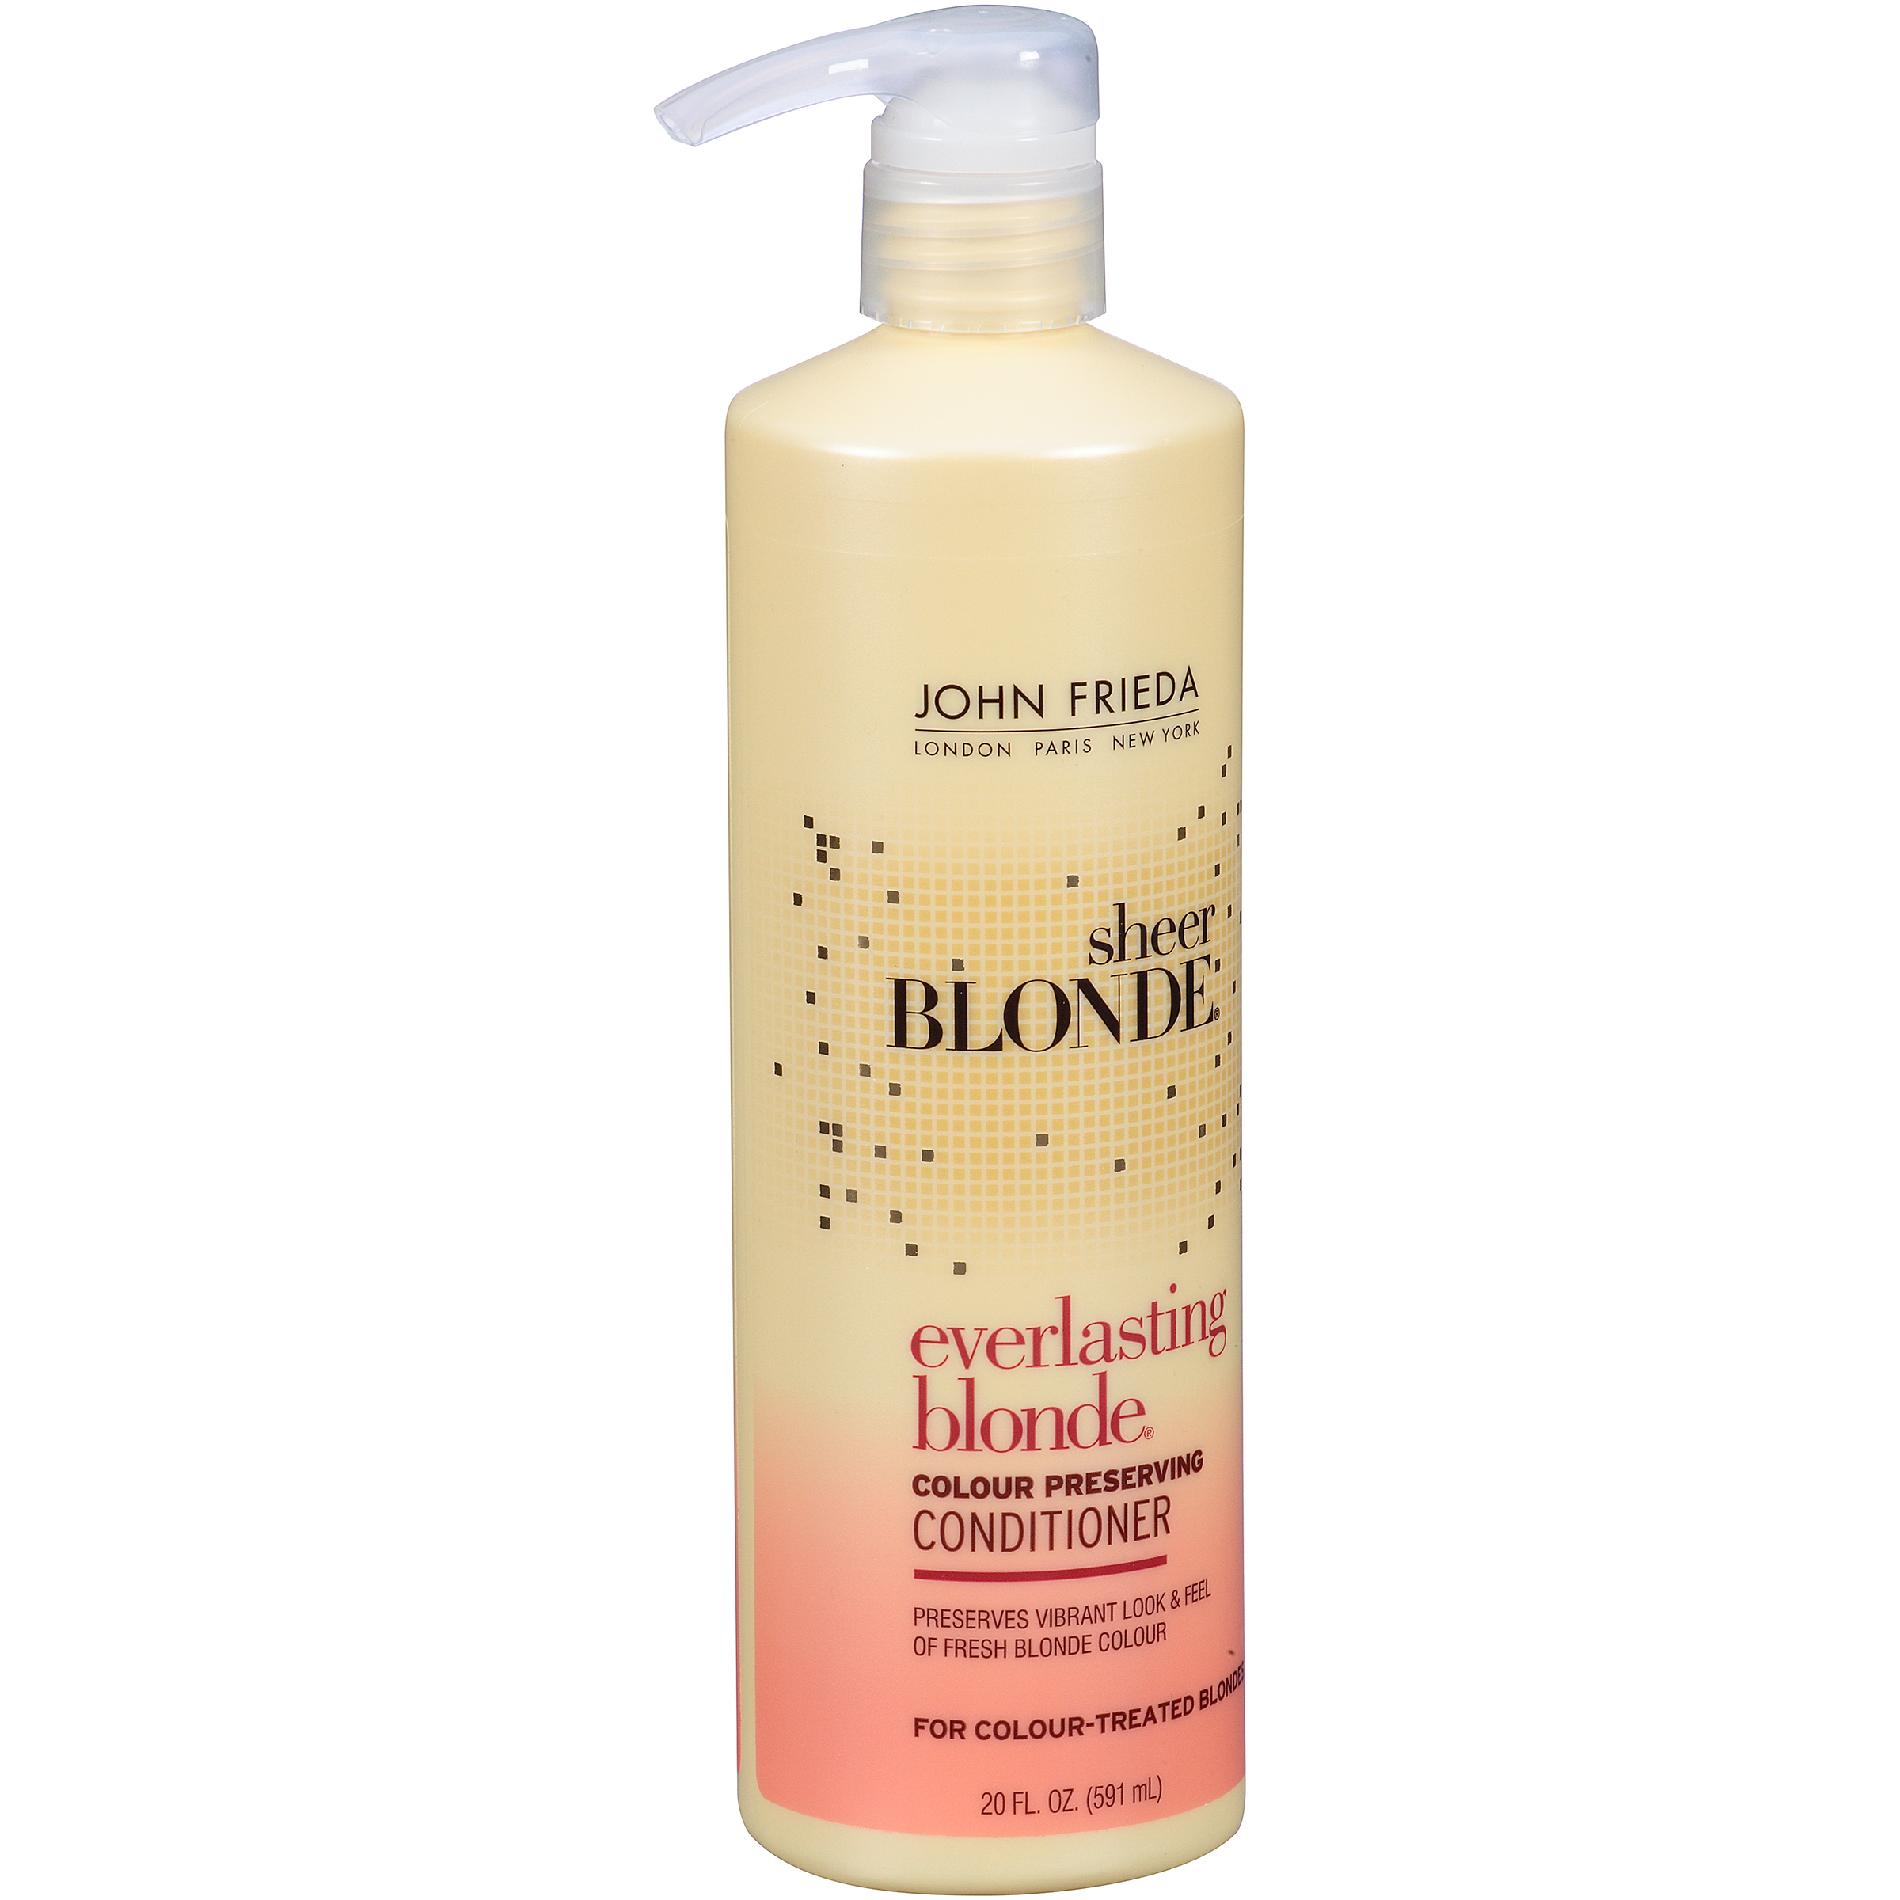 John Frieda Conditioner, Sheer Blonde Everlasting Blonde, 20 fl oz (591 ml)